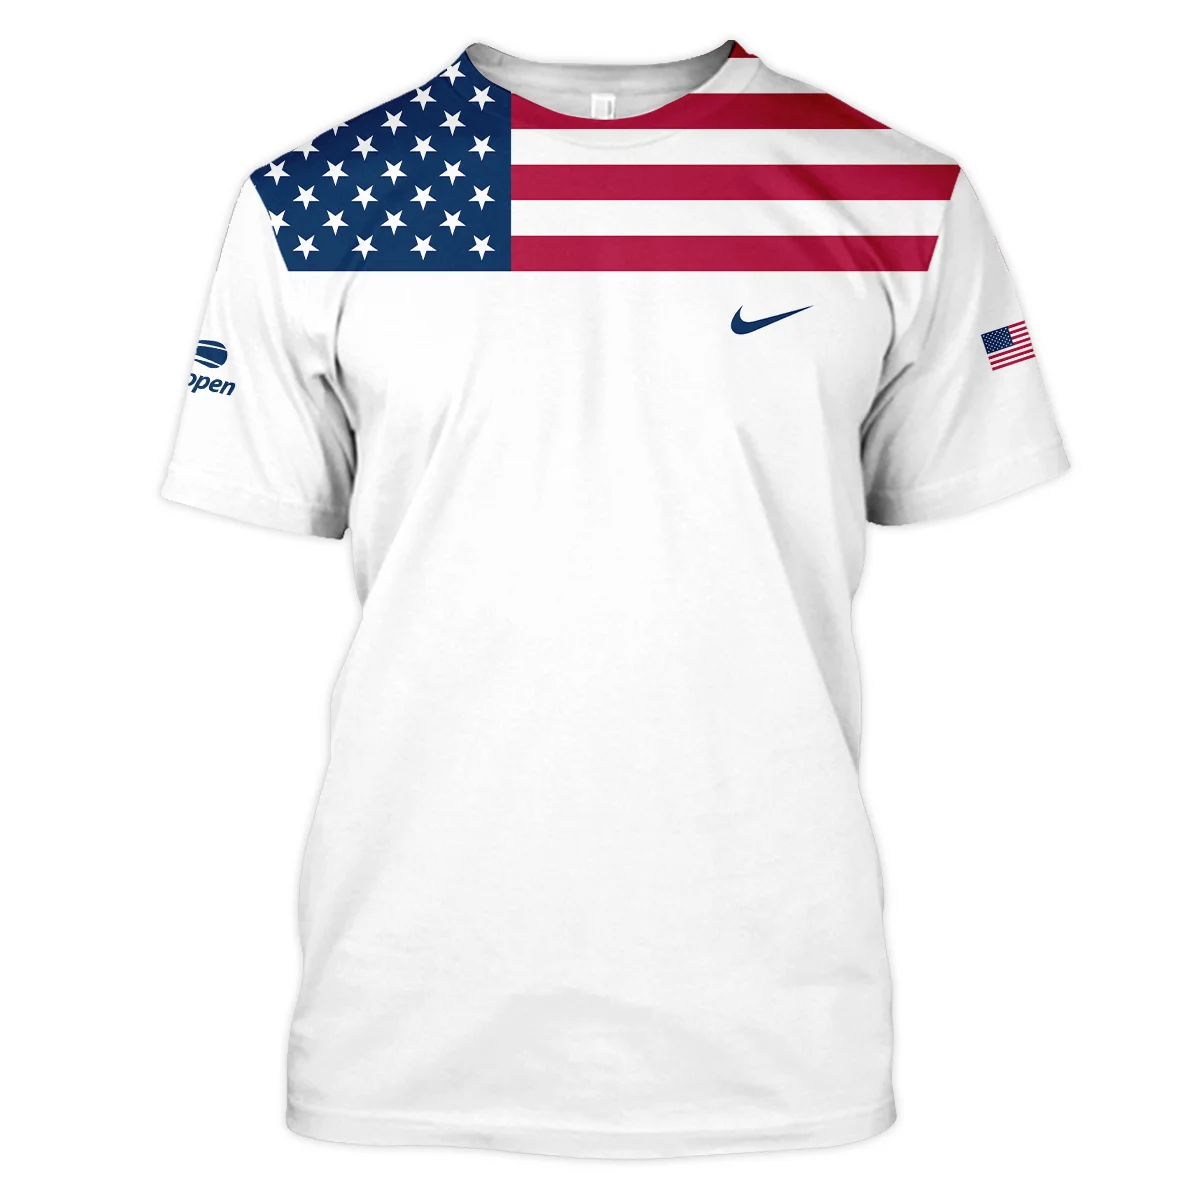 US Open Tennis Champions Nike USA Flag White Zipper Polo Shirt Style Classic Zipper Polo Shirt For Men